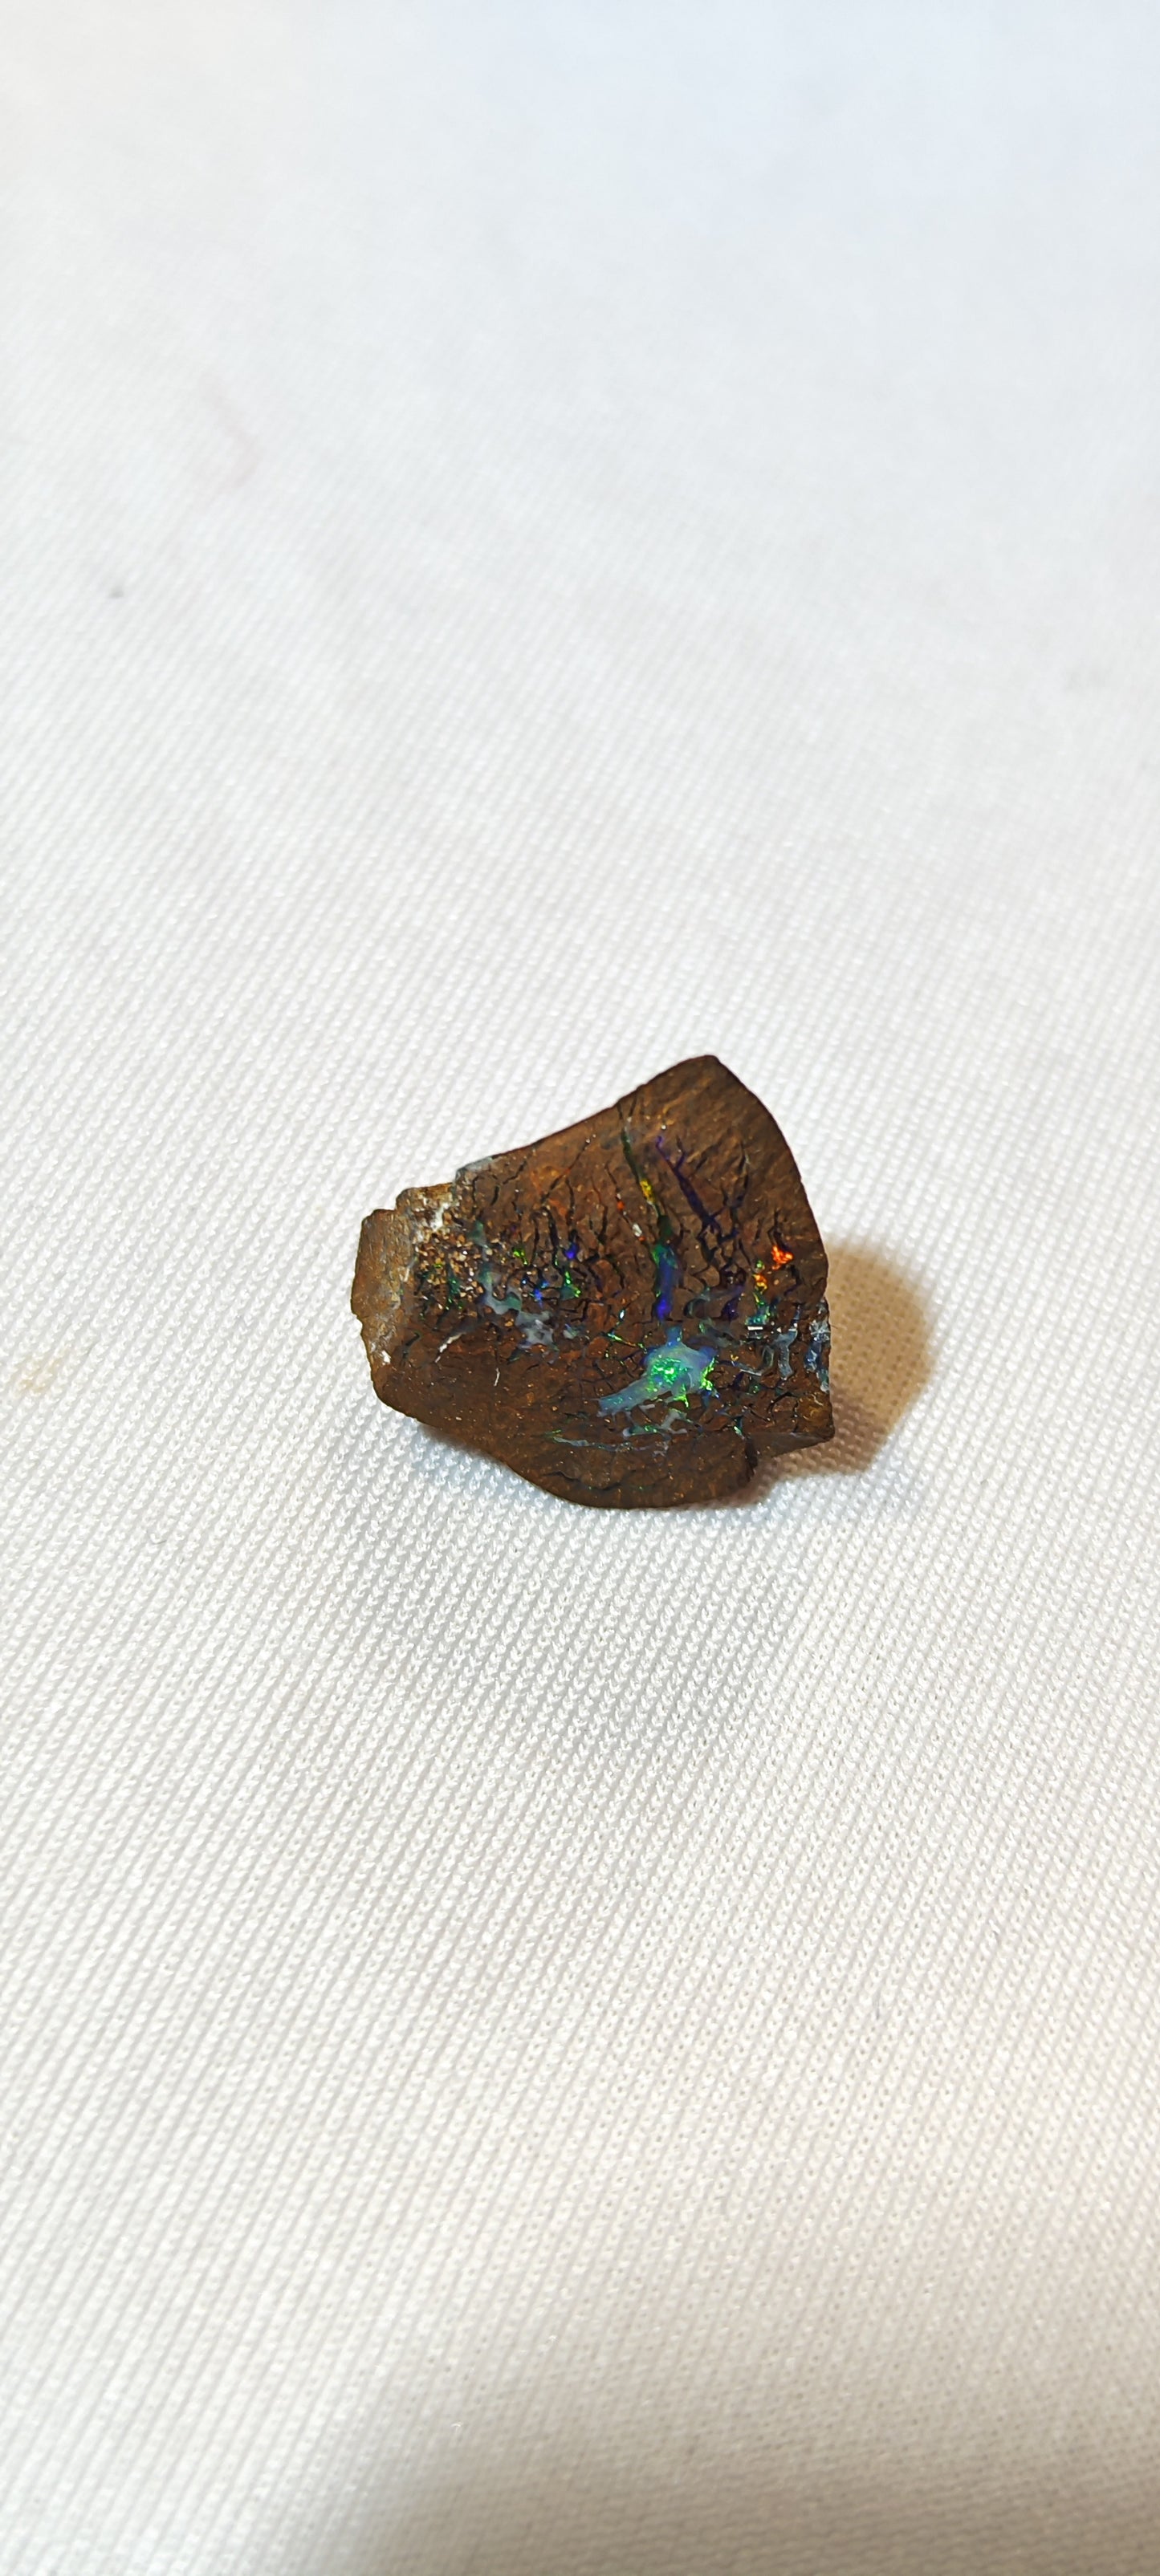 Opale boulder matrix brut